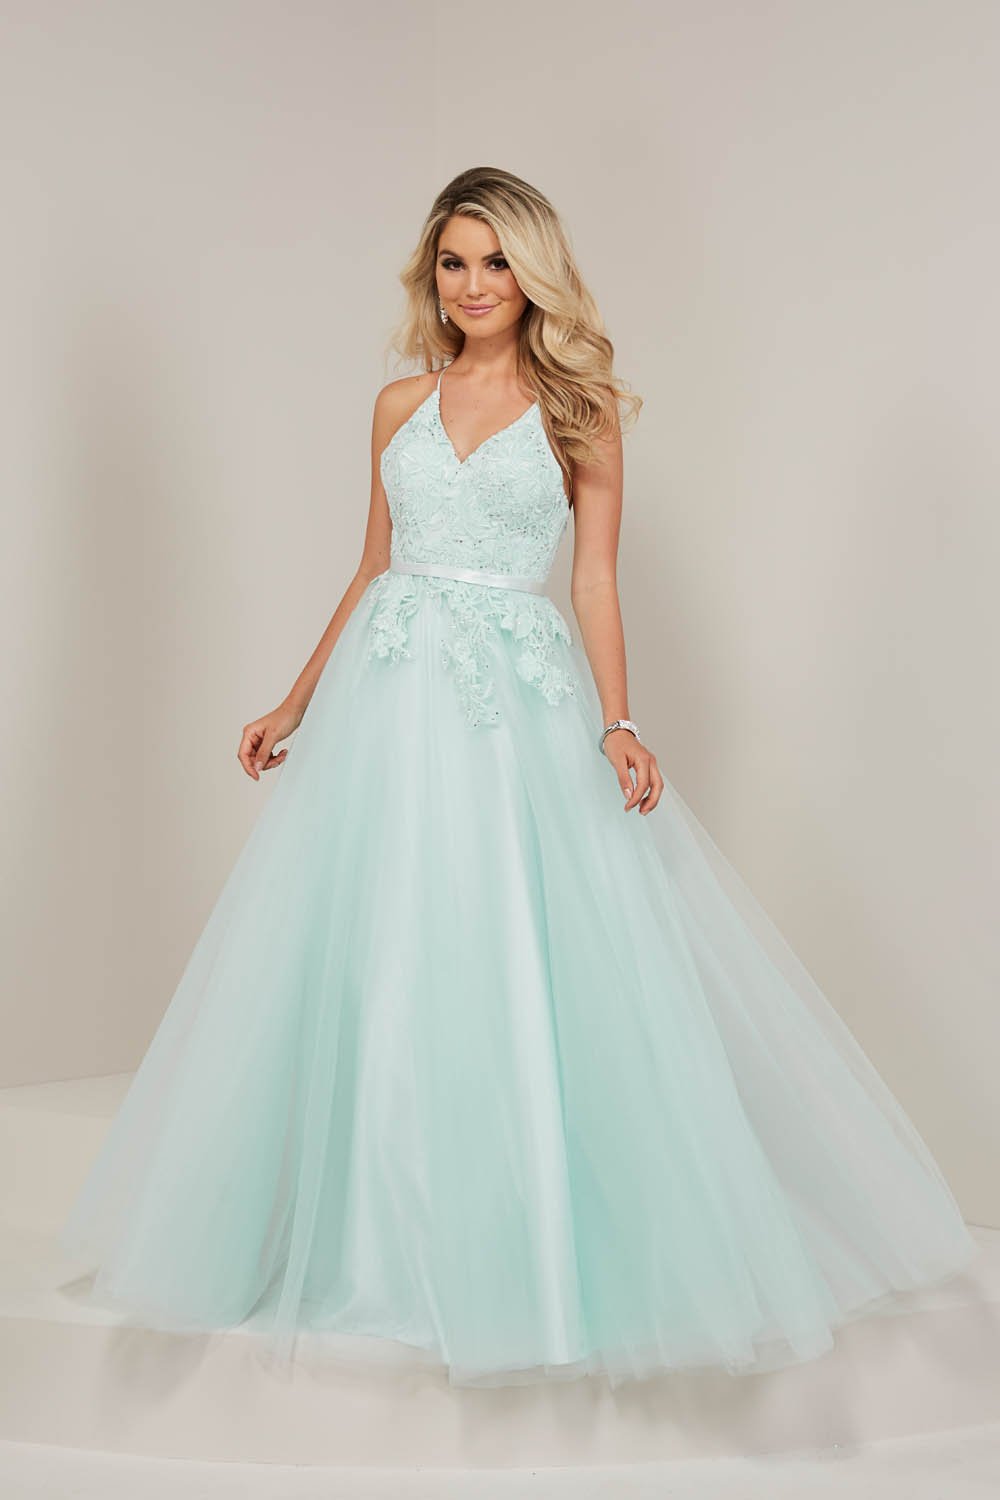 Tiffany 16362 Dress - Formal Approach - Tiffany Prom Dresses